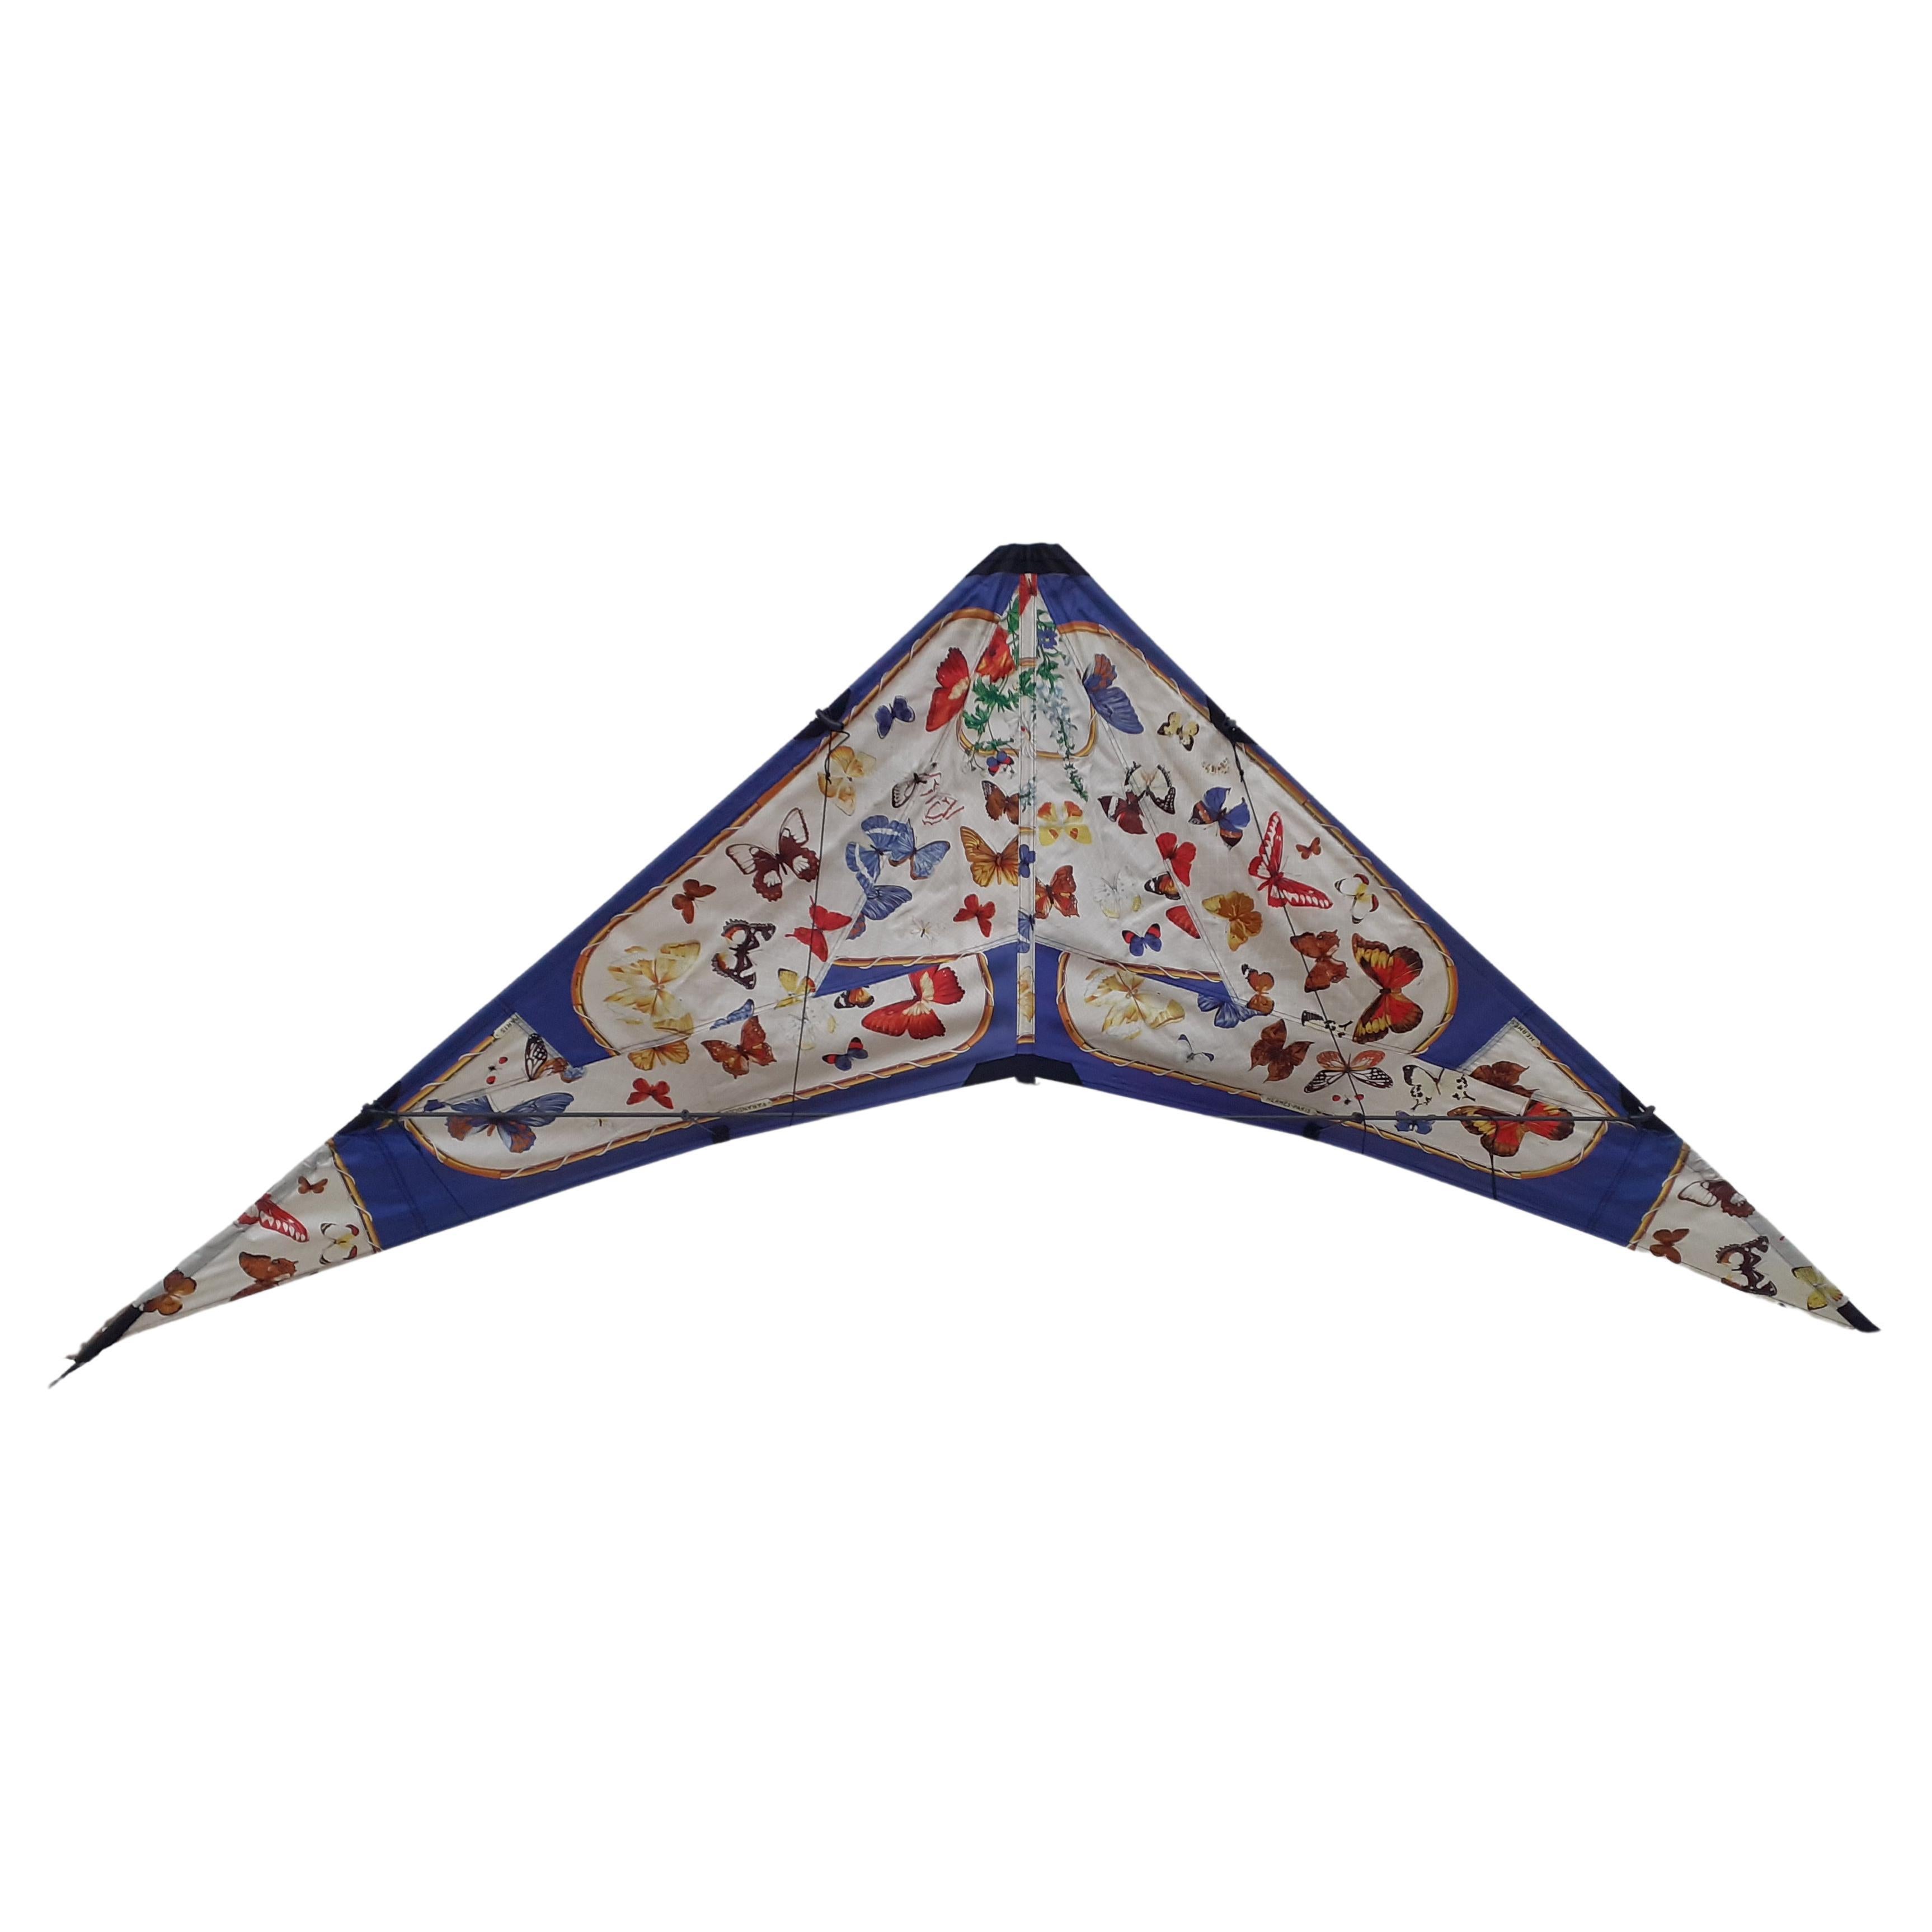 Exceptional Hermès Vintage Kite Farandole Butterflies Print RARE